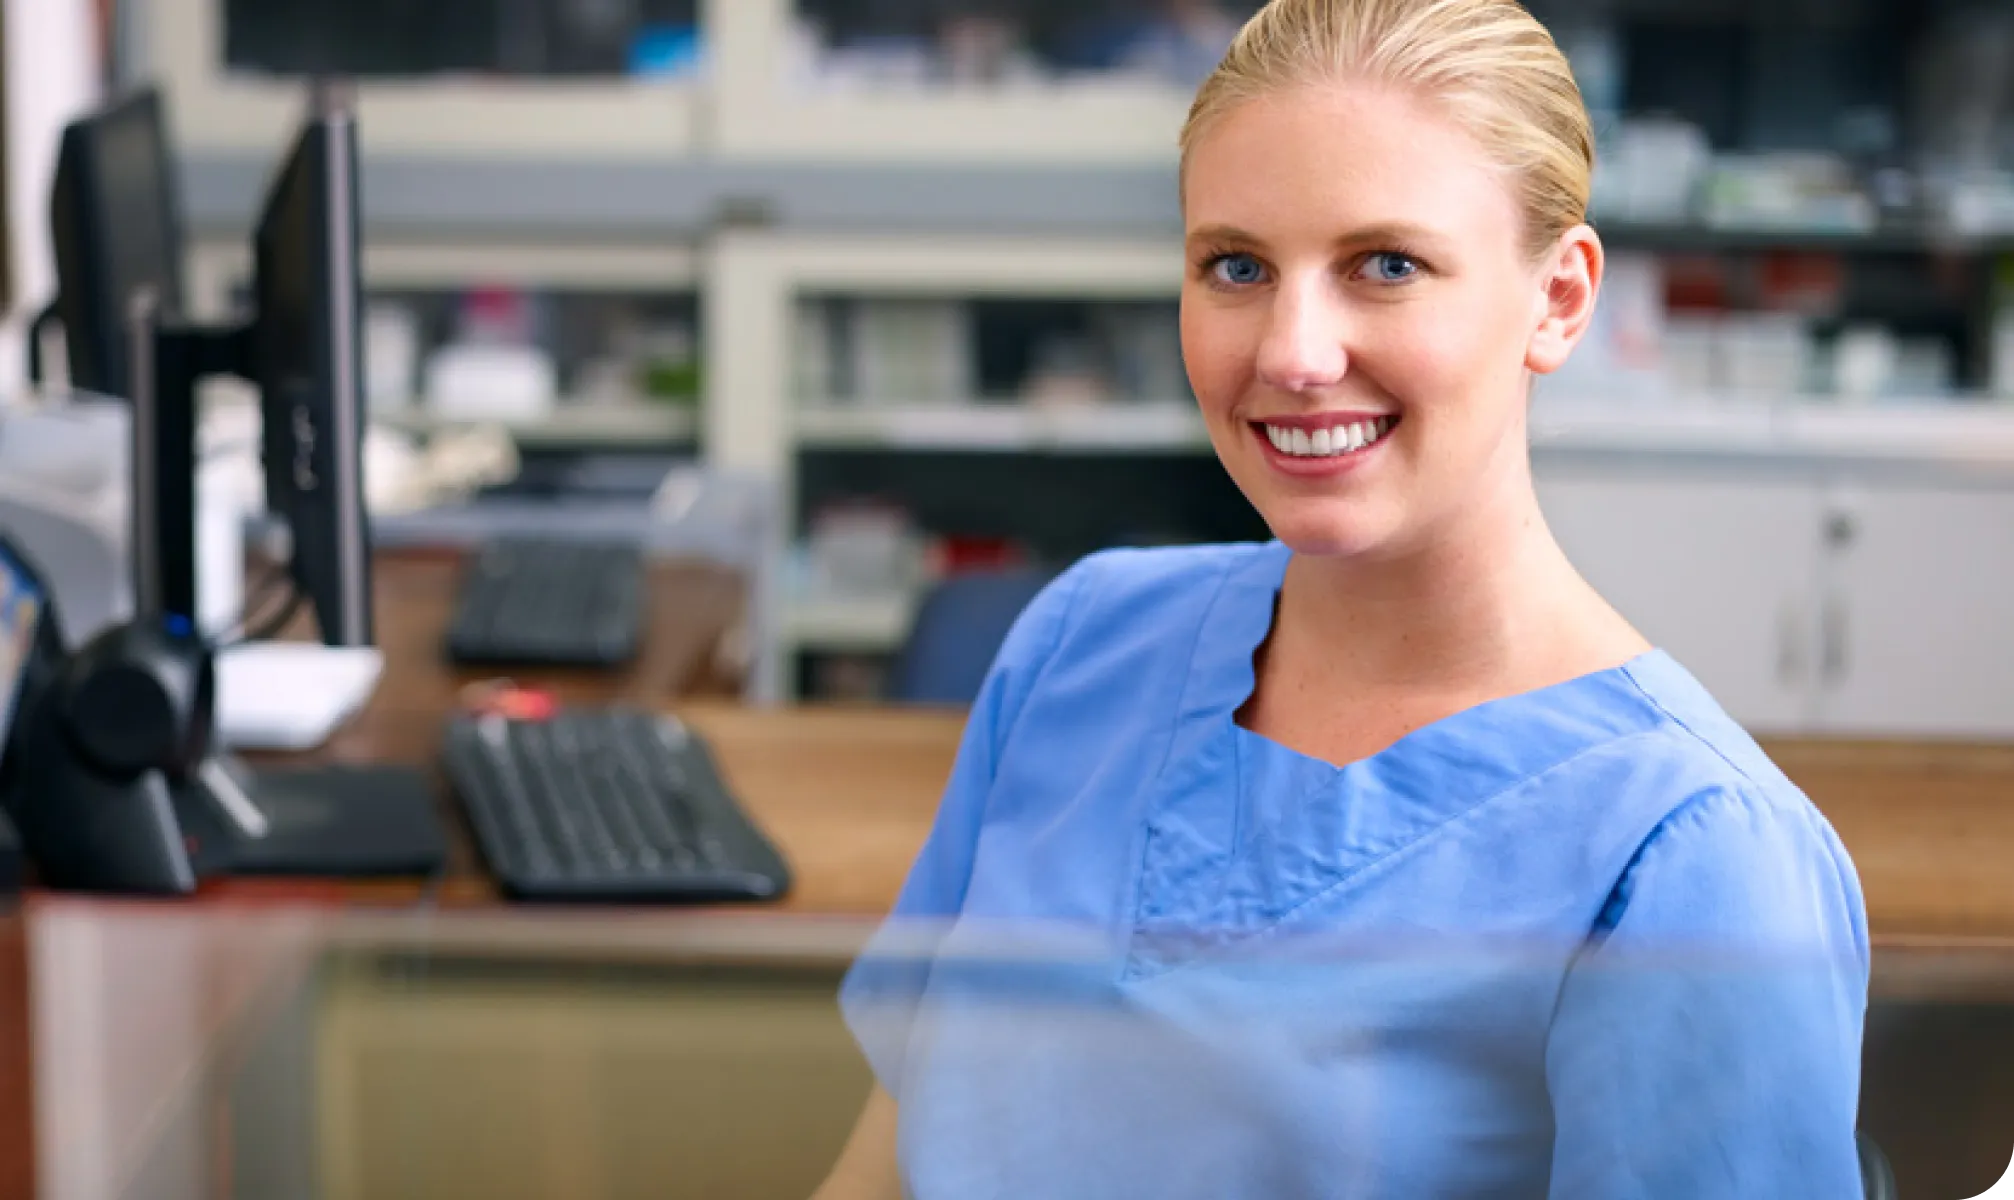 A woman wearing scrubs smiling